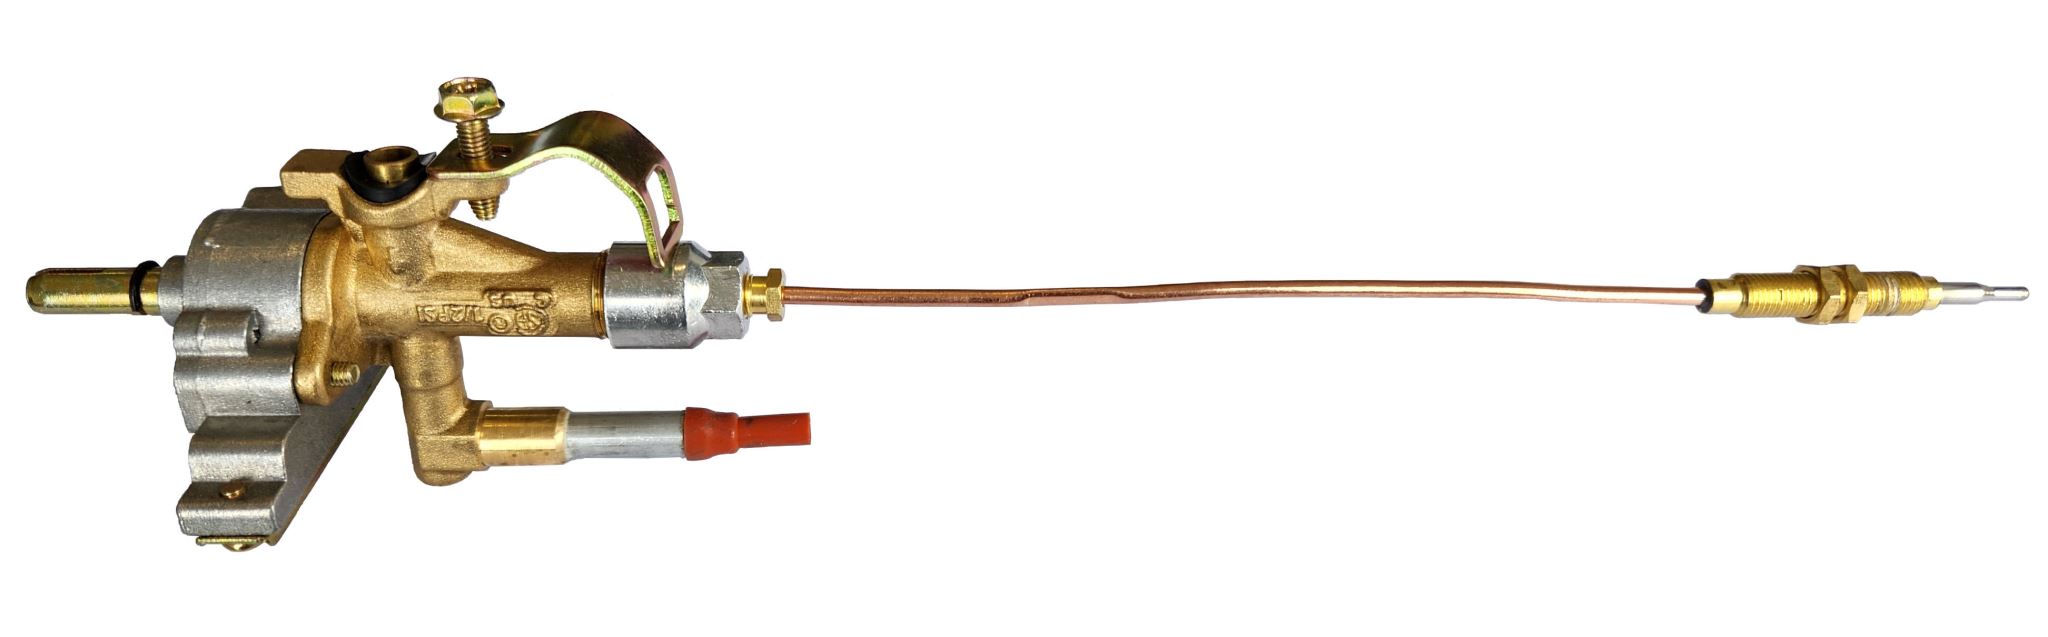 Kiwi Sizzler BBQ Brass Control Unit with Thermocouple - Fits BBQF, BBQWF, KS4157